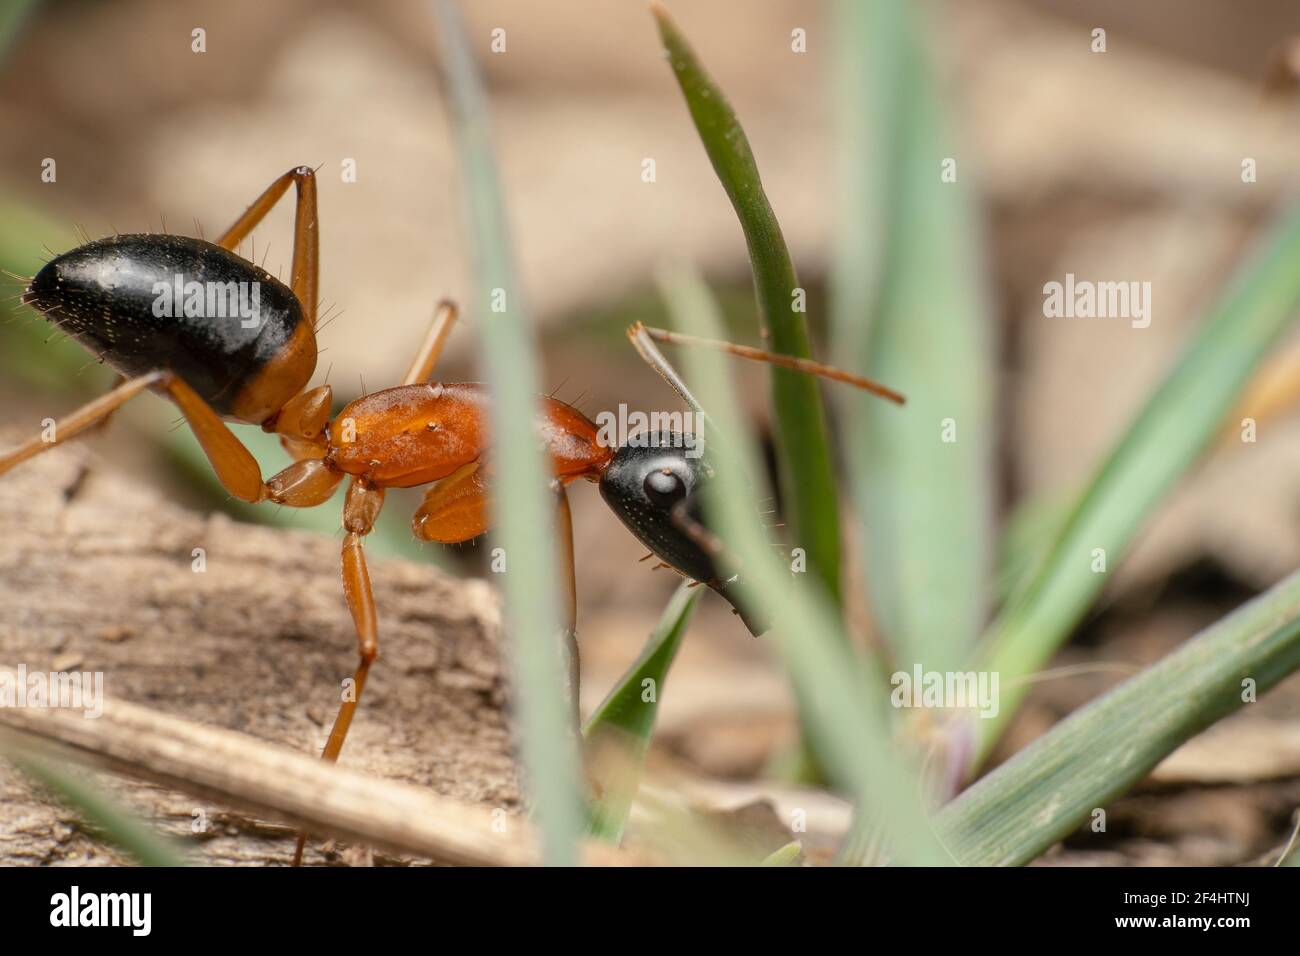 https://c8.alamy.com/comp/2F4HTNJ/black-headed-orange-sugar-ants-scientific-name-camponotus-nigriceps-walking-down-the-hill-shot-through-the-grass-2F4HTNJ.jpg